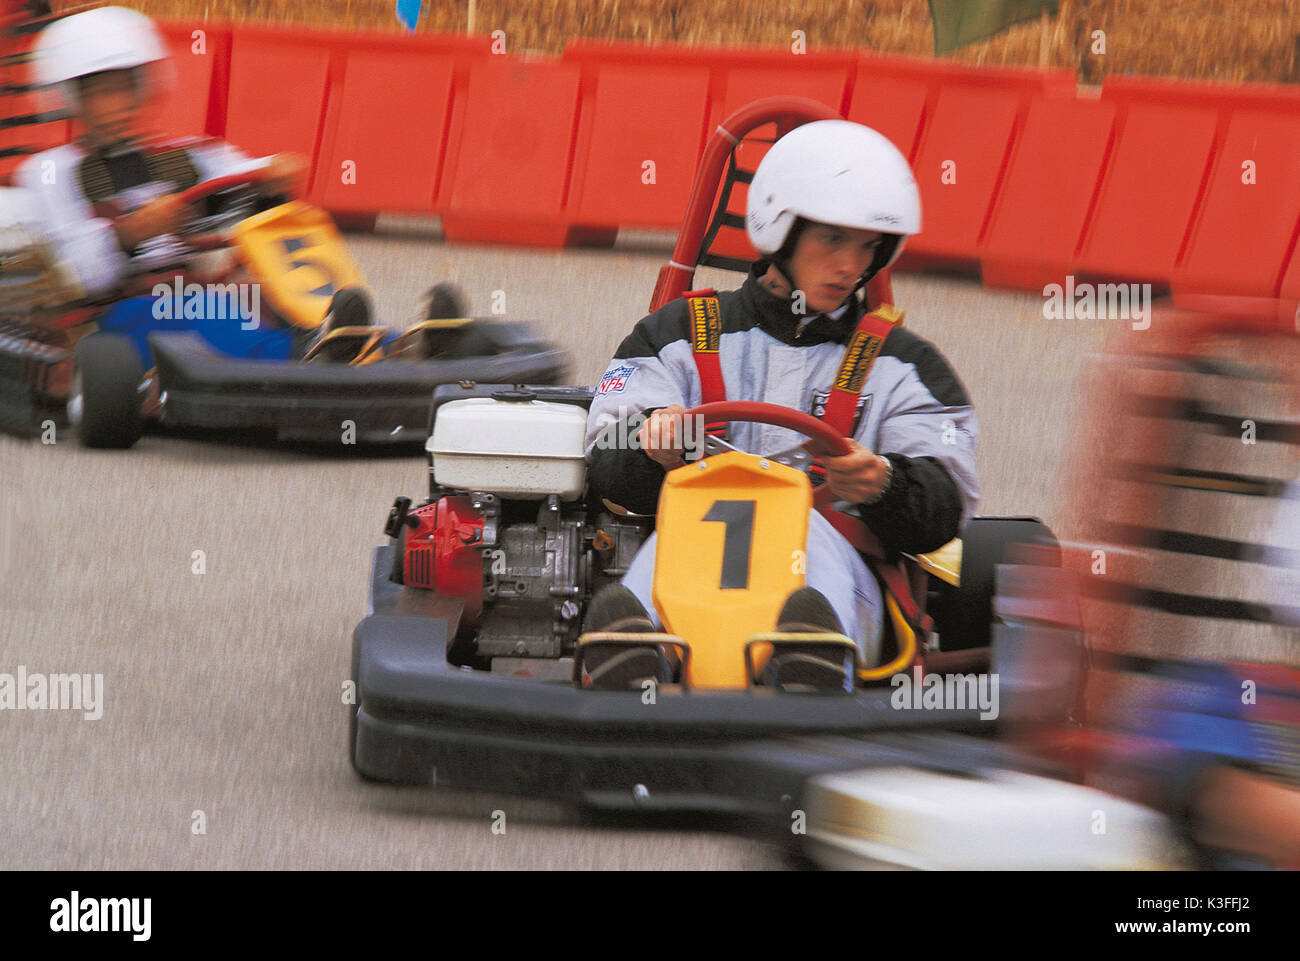 kart racing Stock Photo